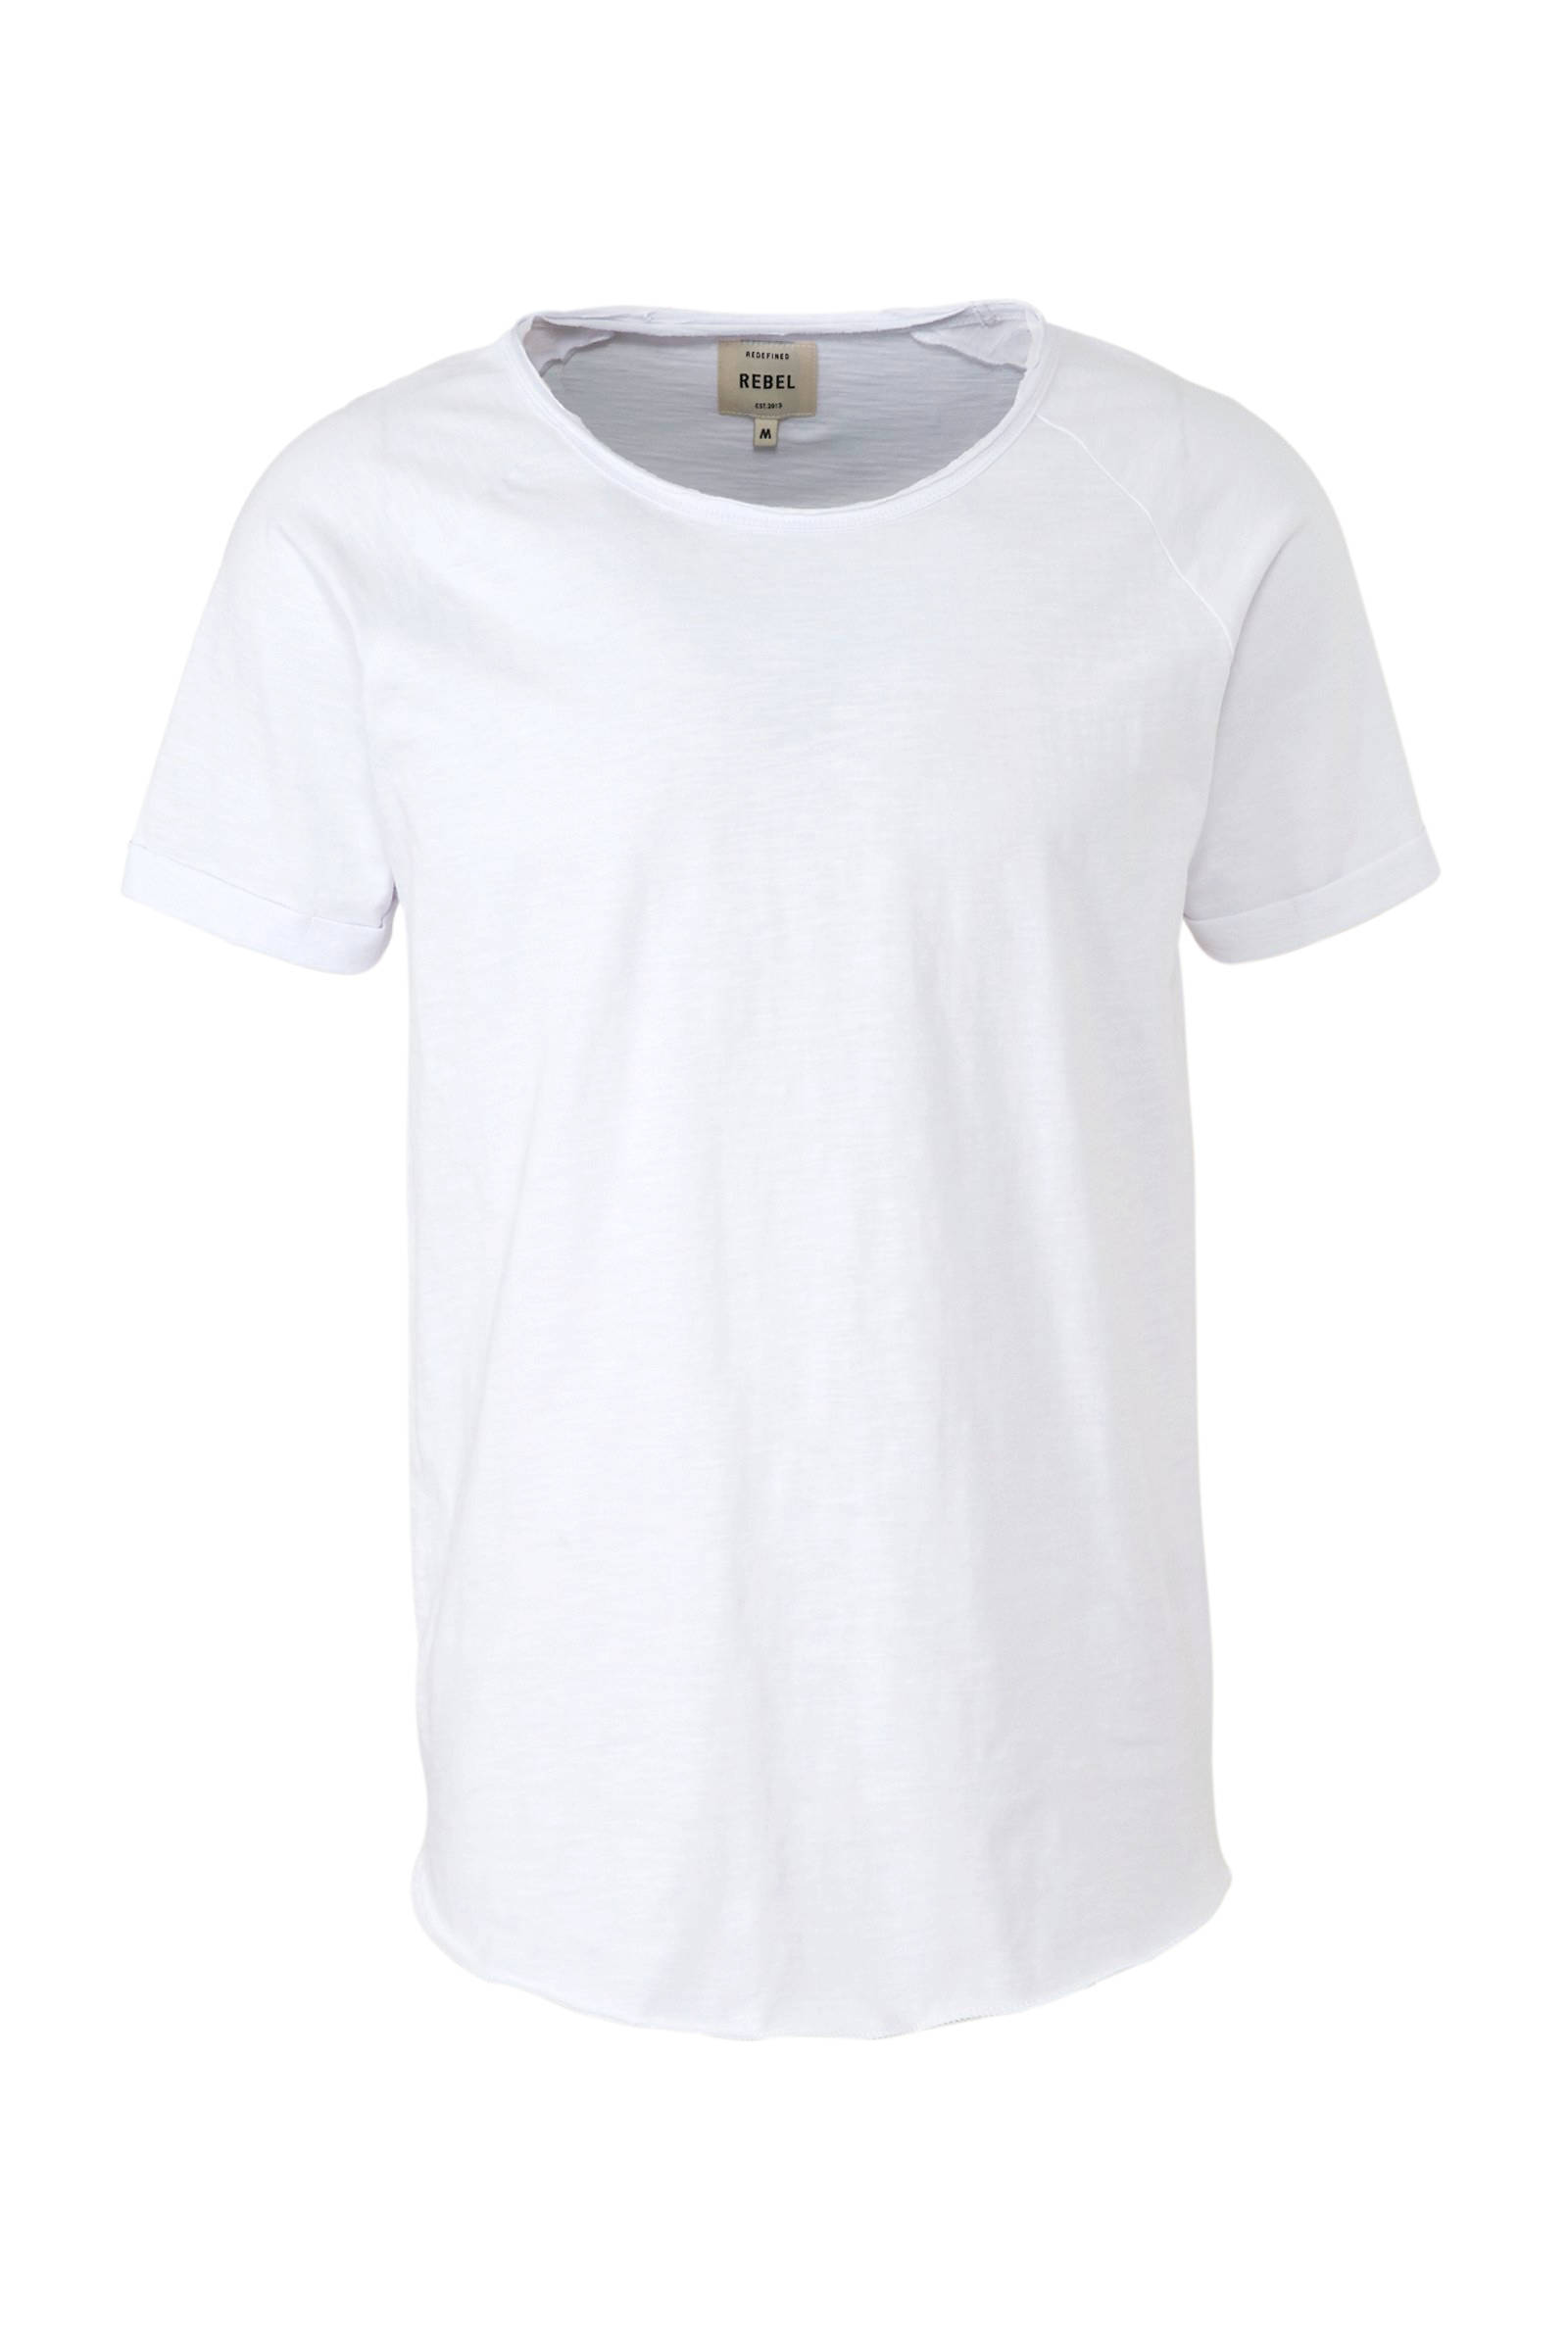 Redefined Rebel T shirt wit online kopen